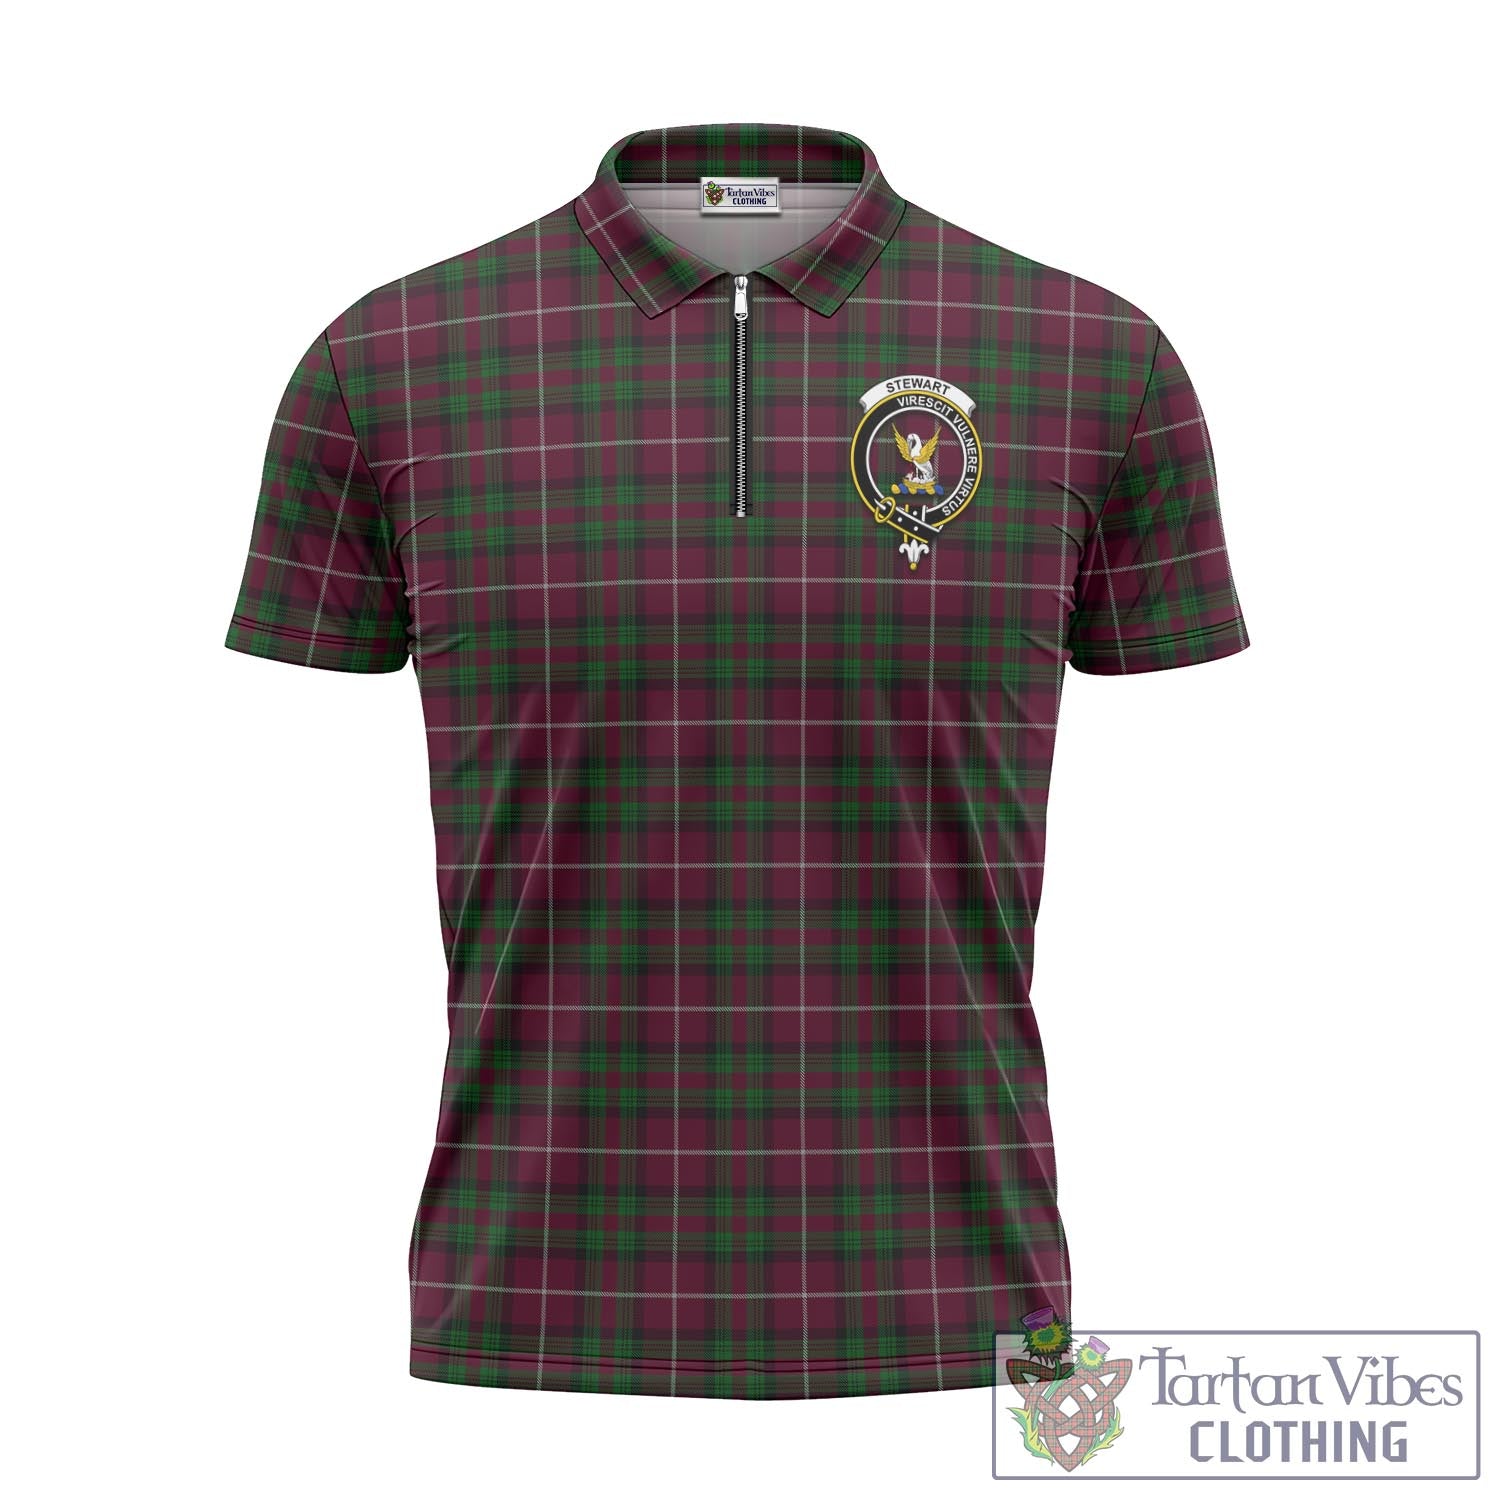 Tartan Vibes Clothing Stewart of Bute Hunting Tartan Zipper Polo Shirt with Family Crest